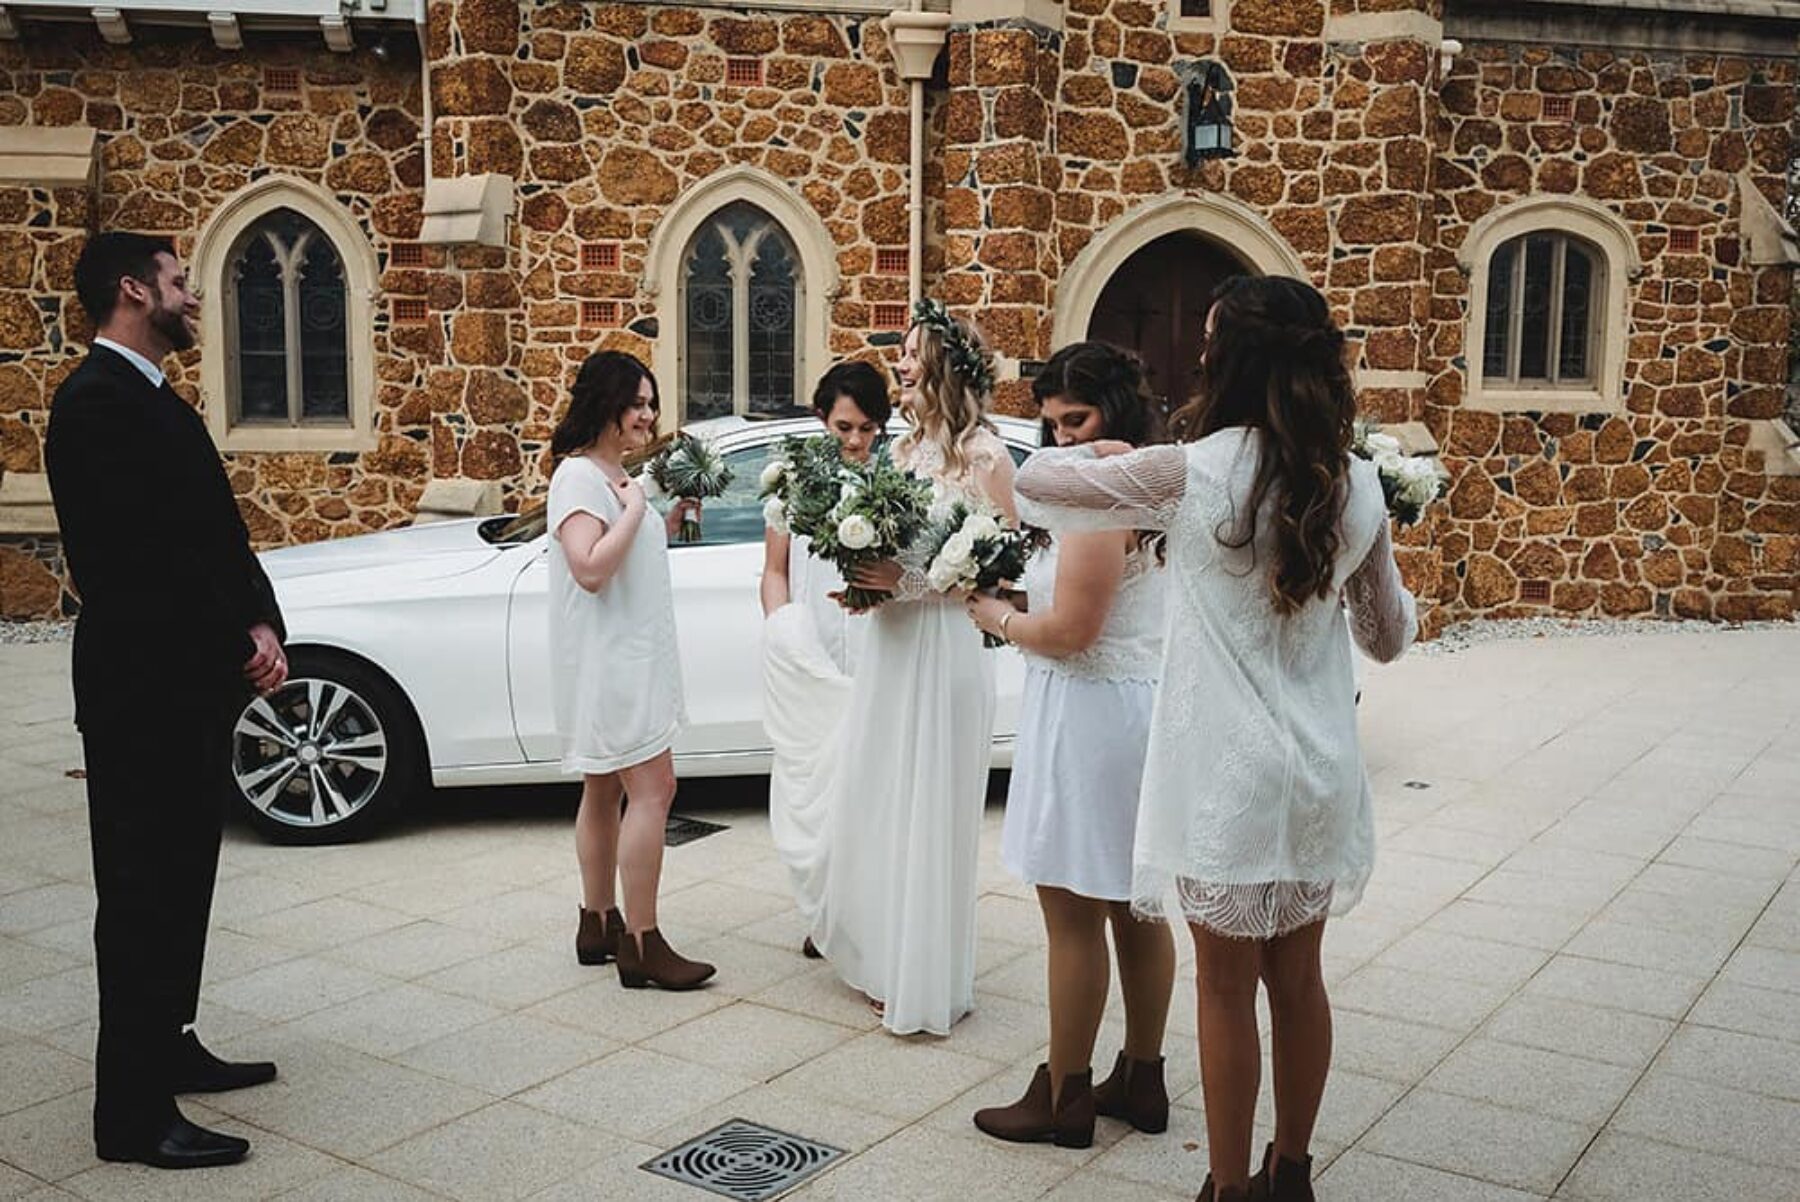 Darlington Estate wedding - Perth photographer CJ WIliams